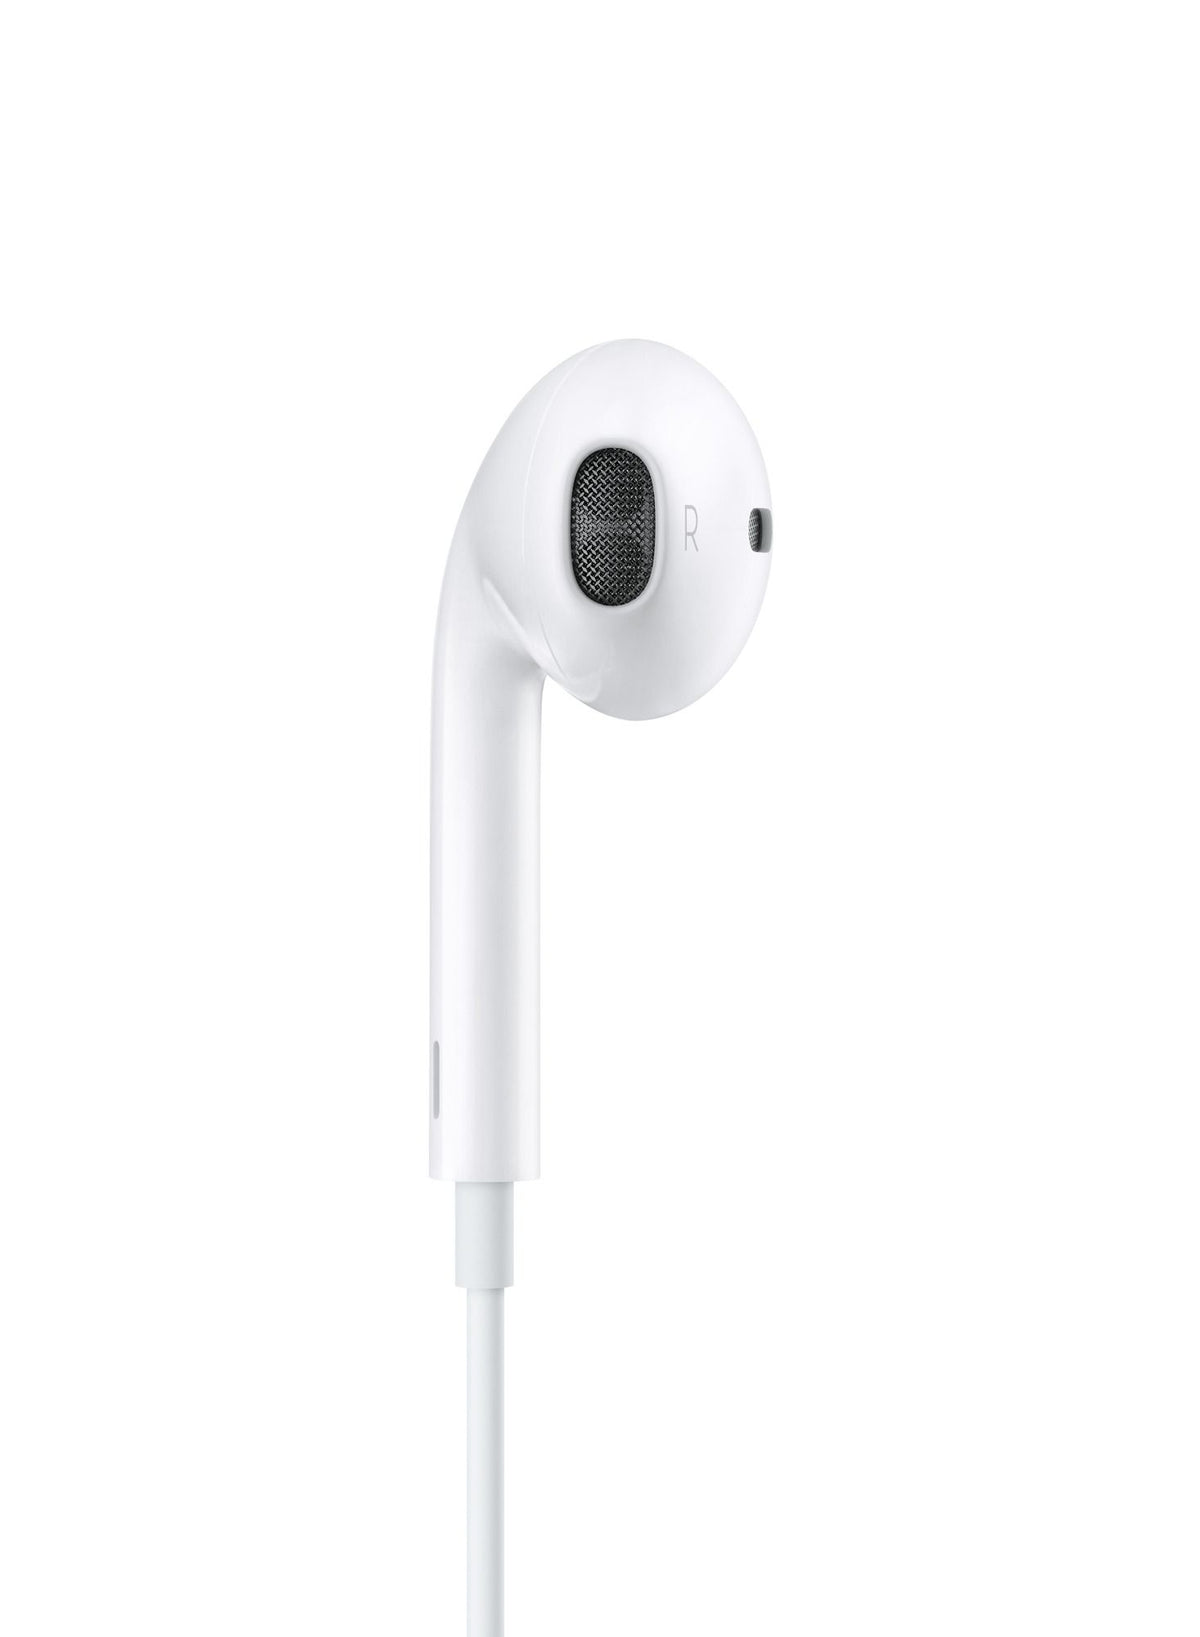 Apple EarPods with Lightning Connector Headphones |MMTN2ZMA| White